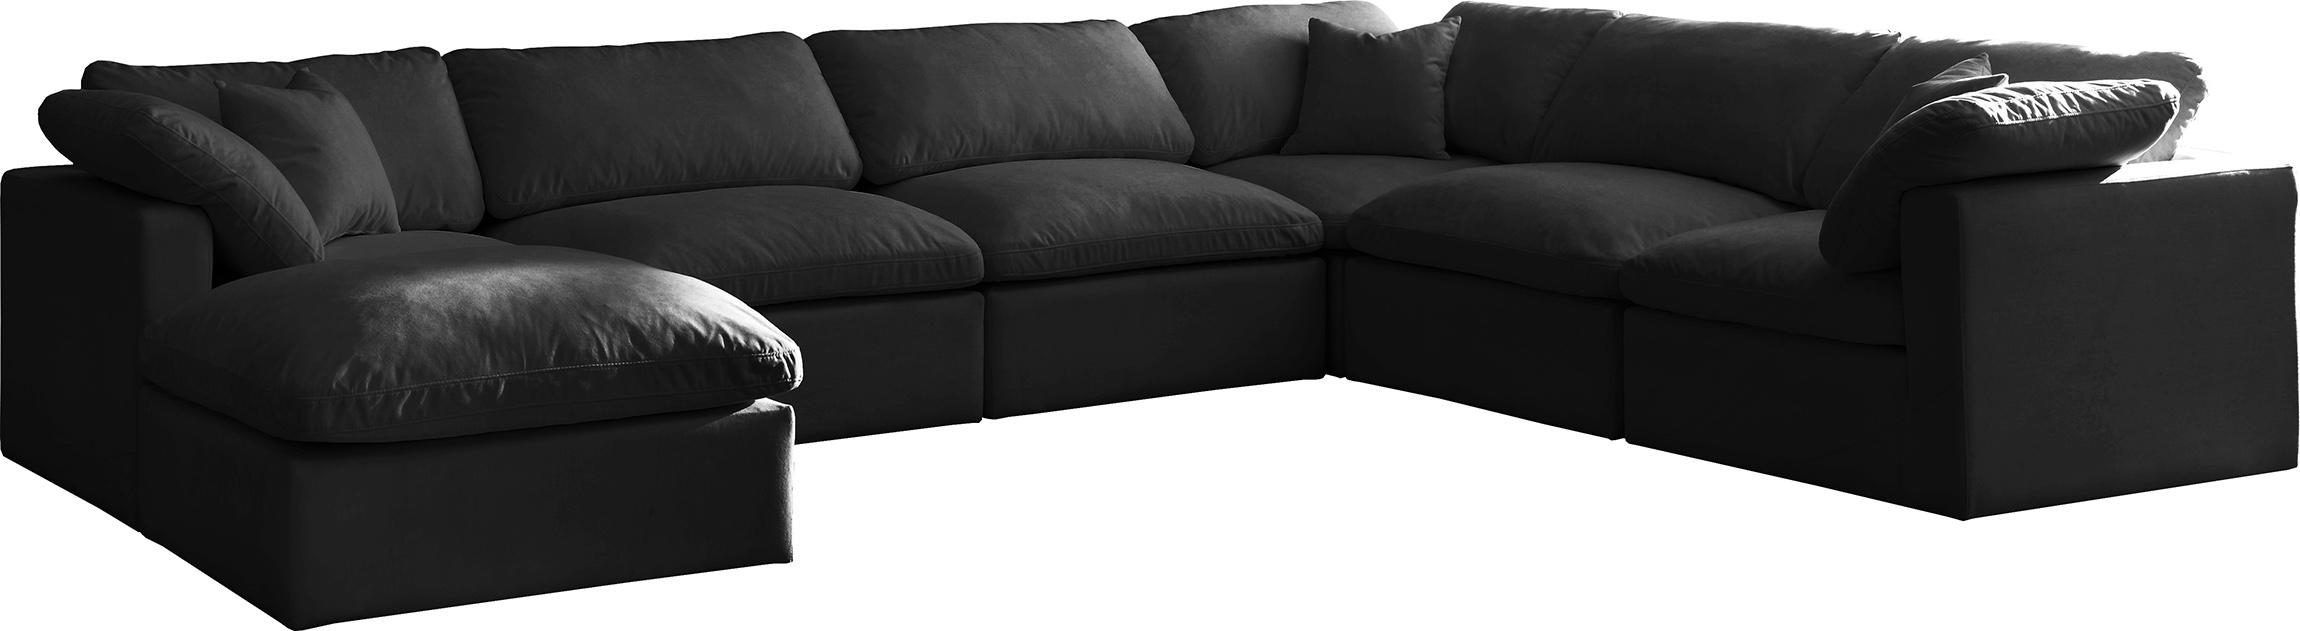 Contemporary, Modern Modular Sectional Sofa 602Black-Sec7A 602Black-Sec7A in Black Fabric